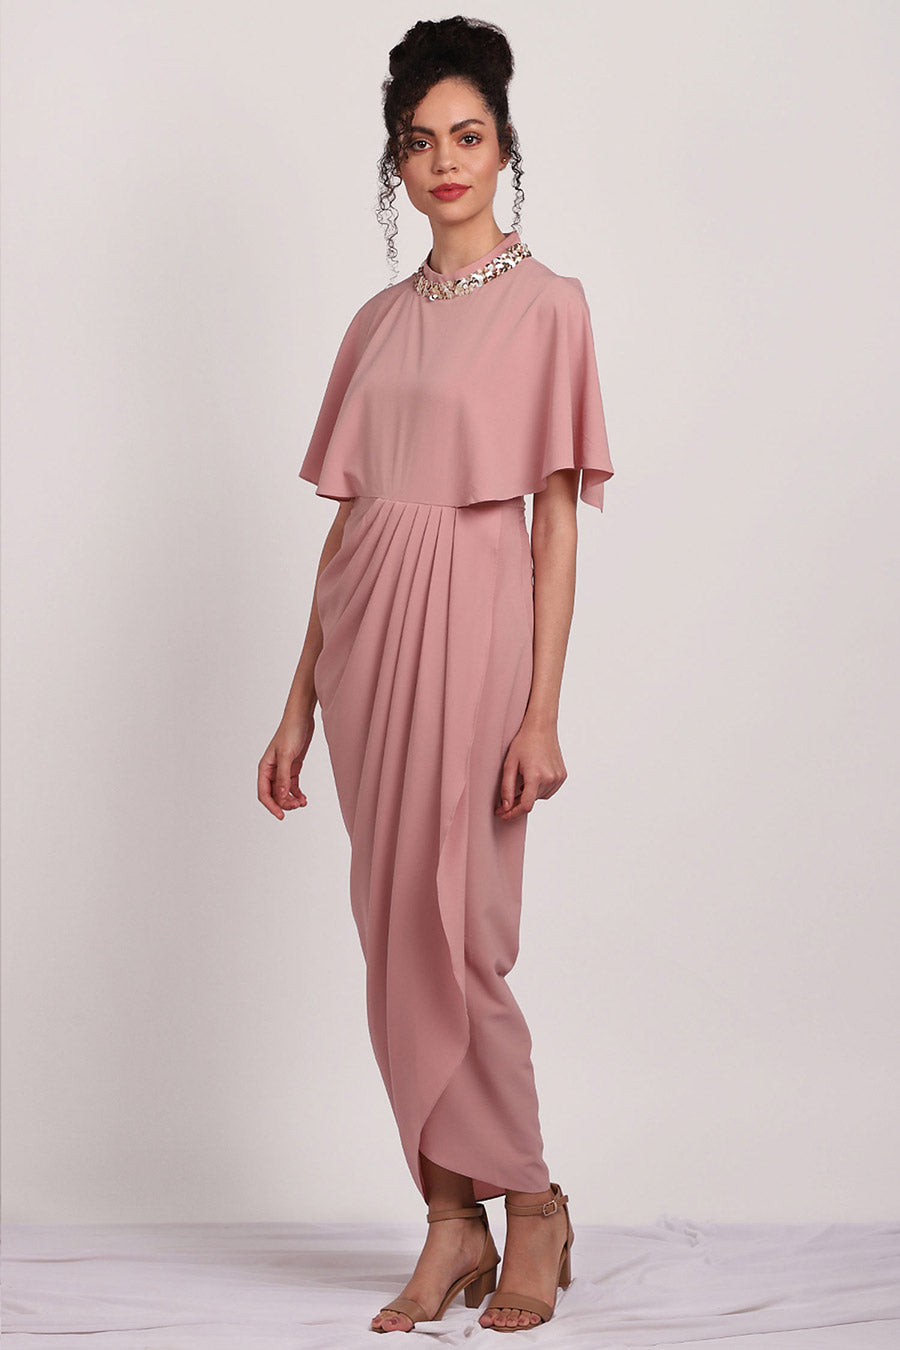 Blush Pink Cape Drape Dress